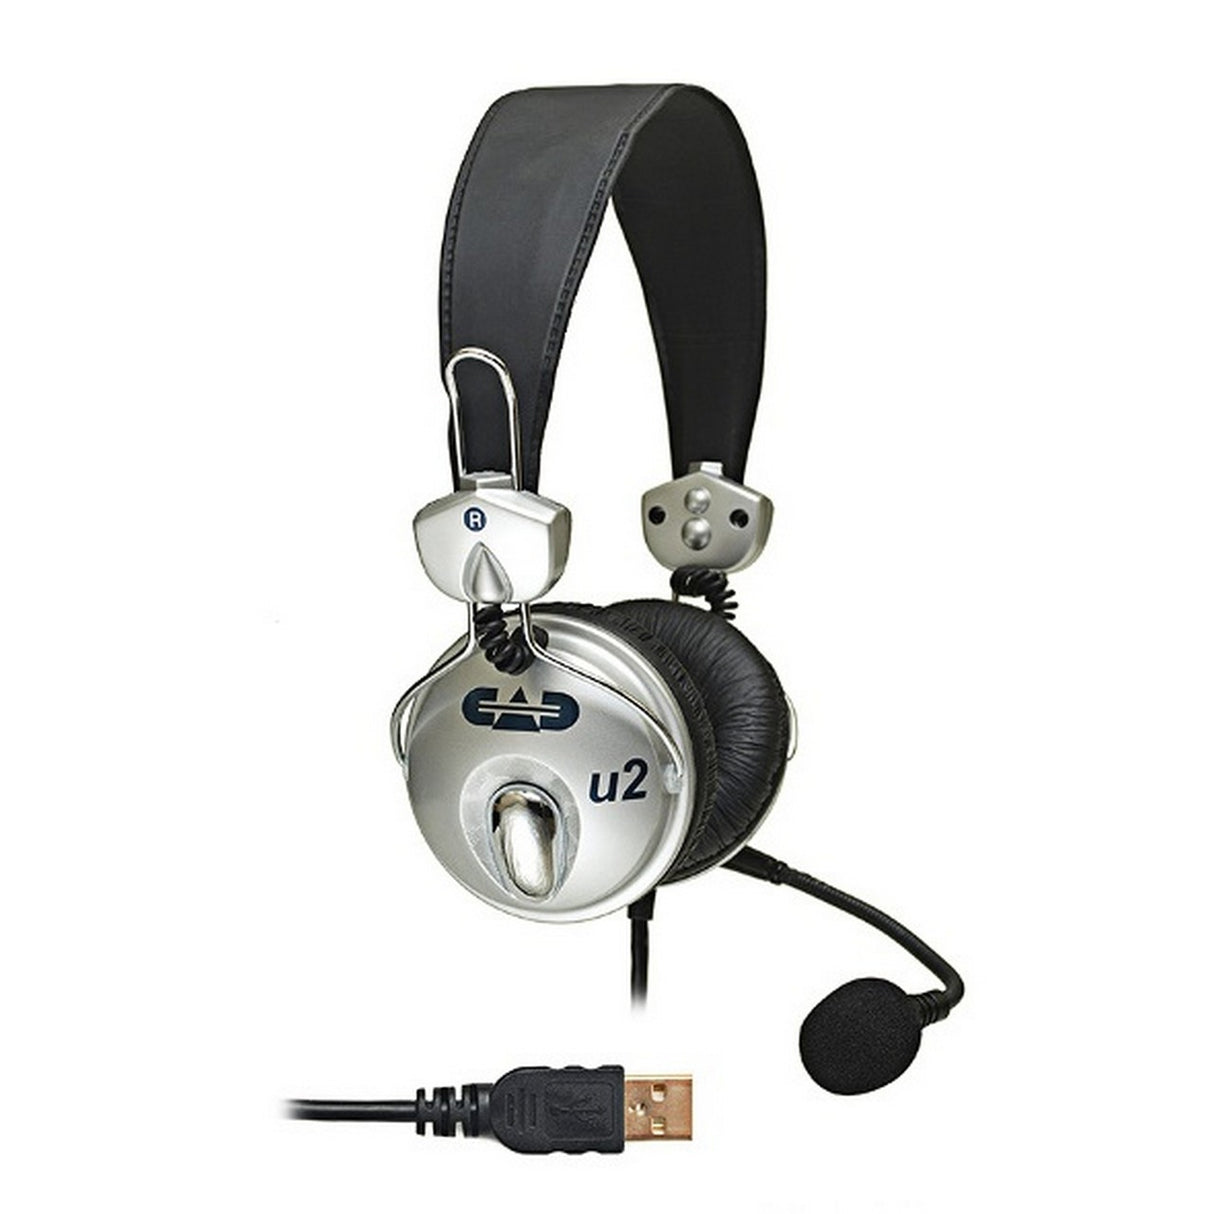 CAD Audio U2 USB Stereo Headphones with Cardioid Condenser Microphone